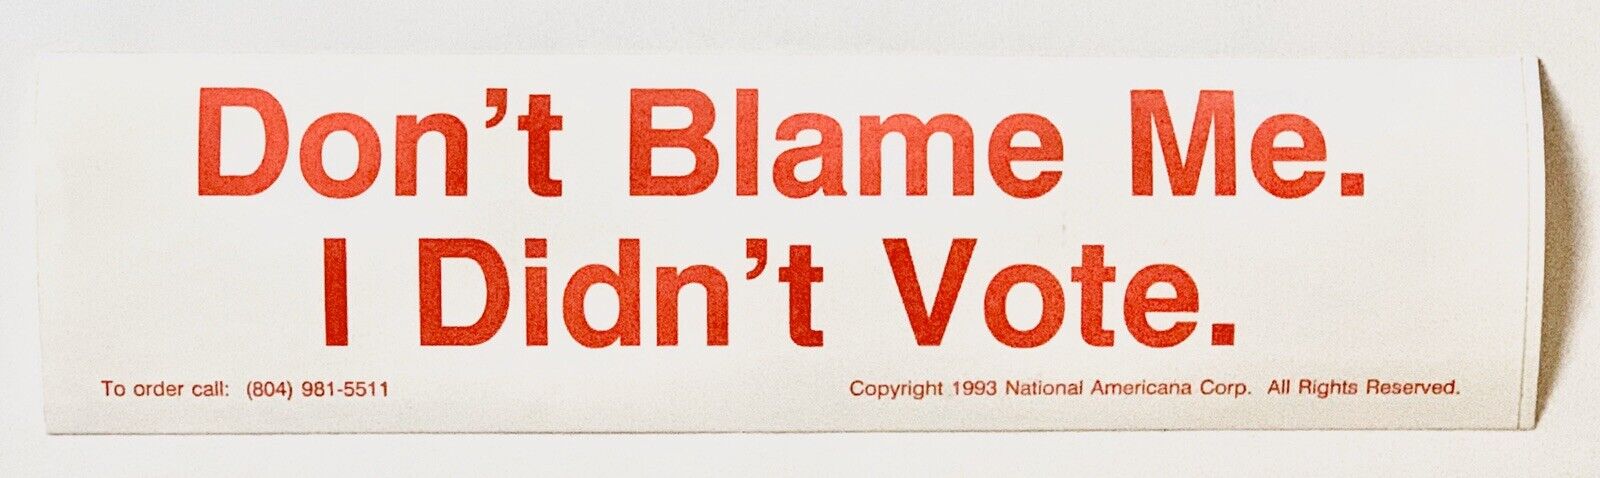 (5) Vintage 1993 Political Bumper Stickers "Don't Blame Me. I Didn't Vote." Без бренда